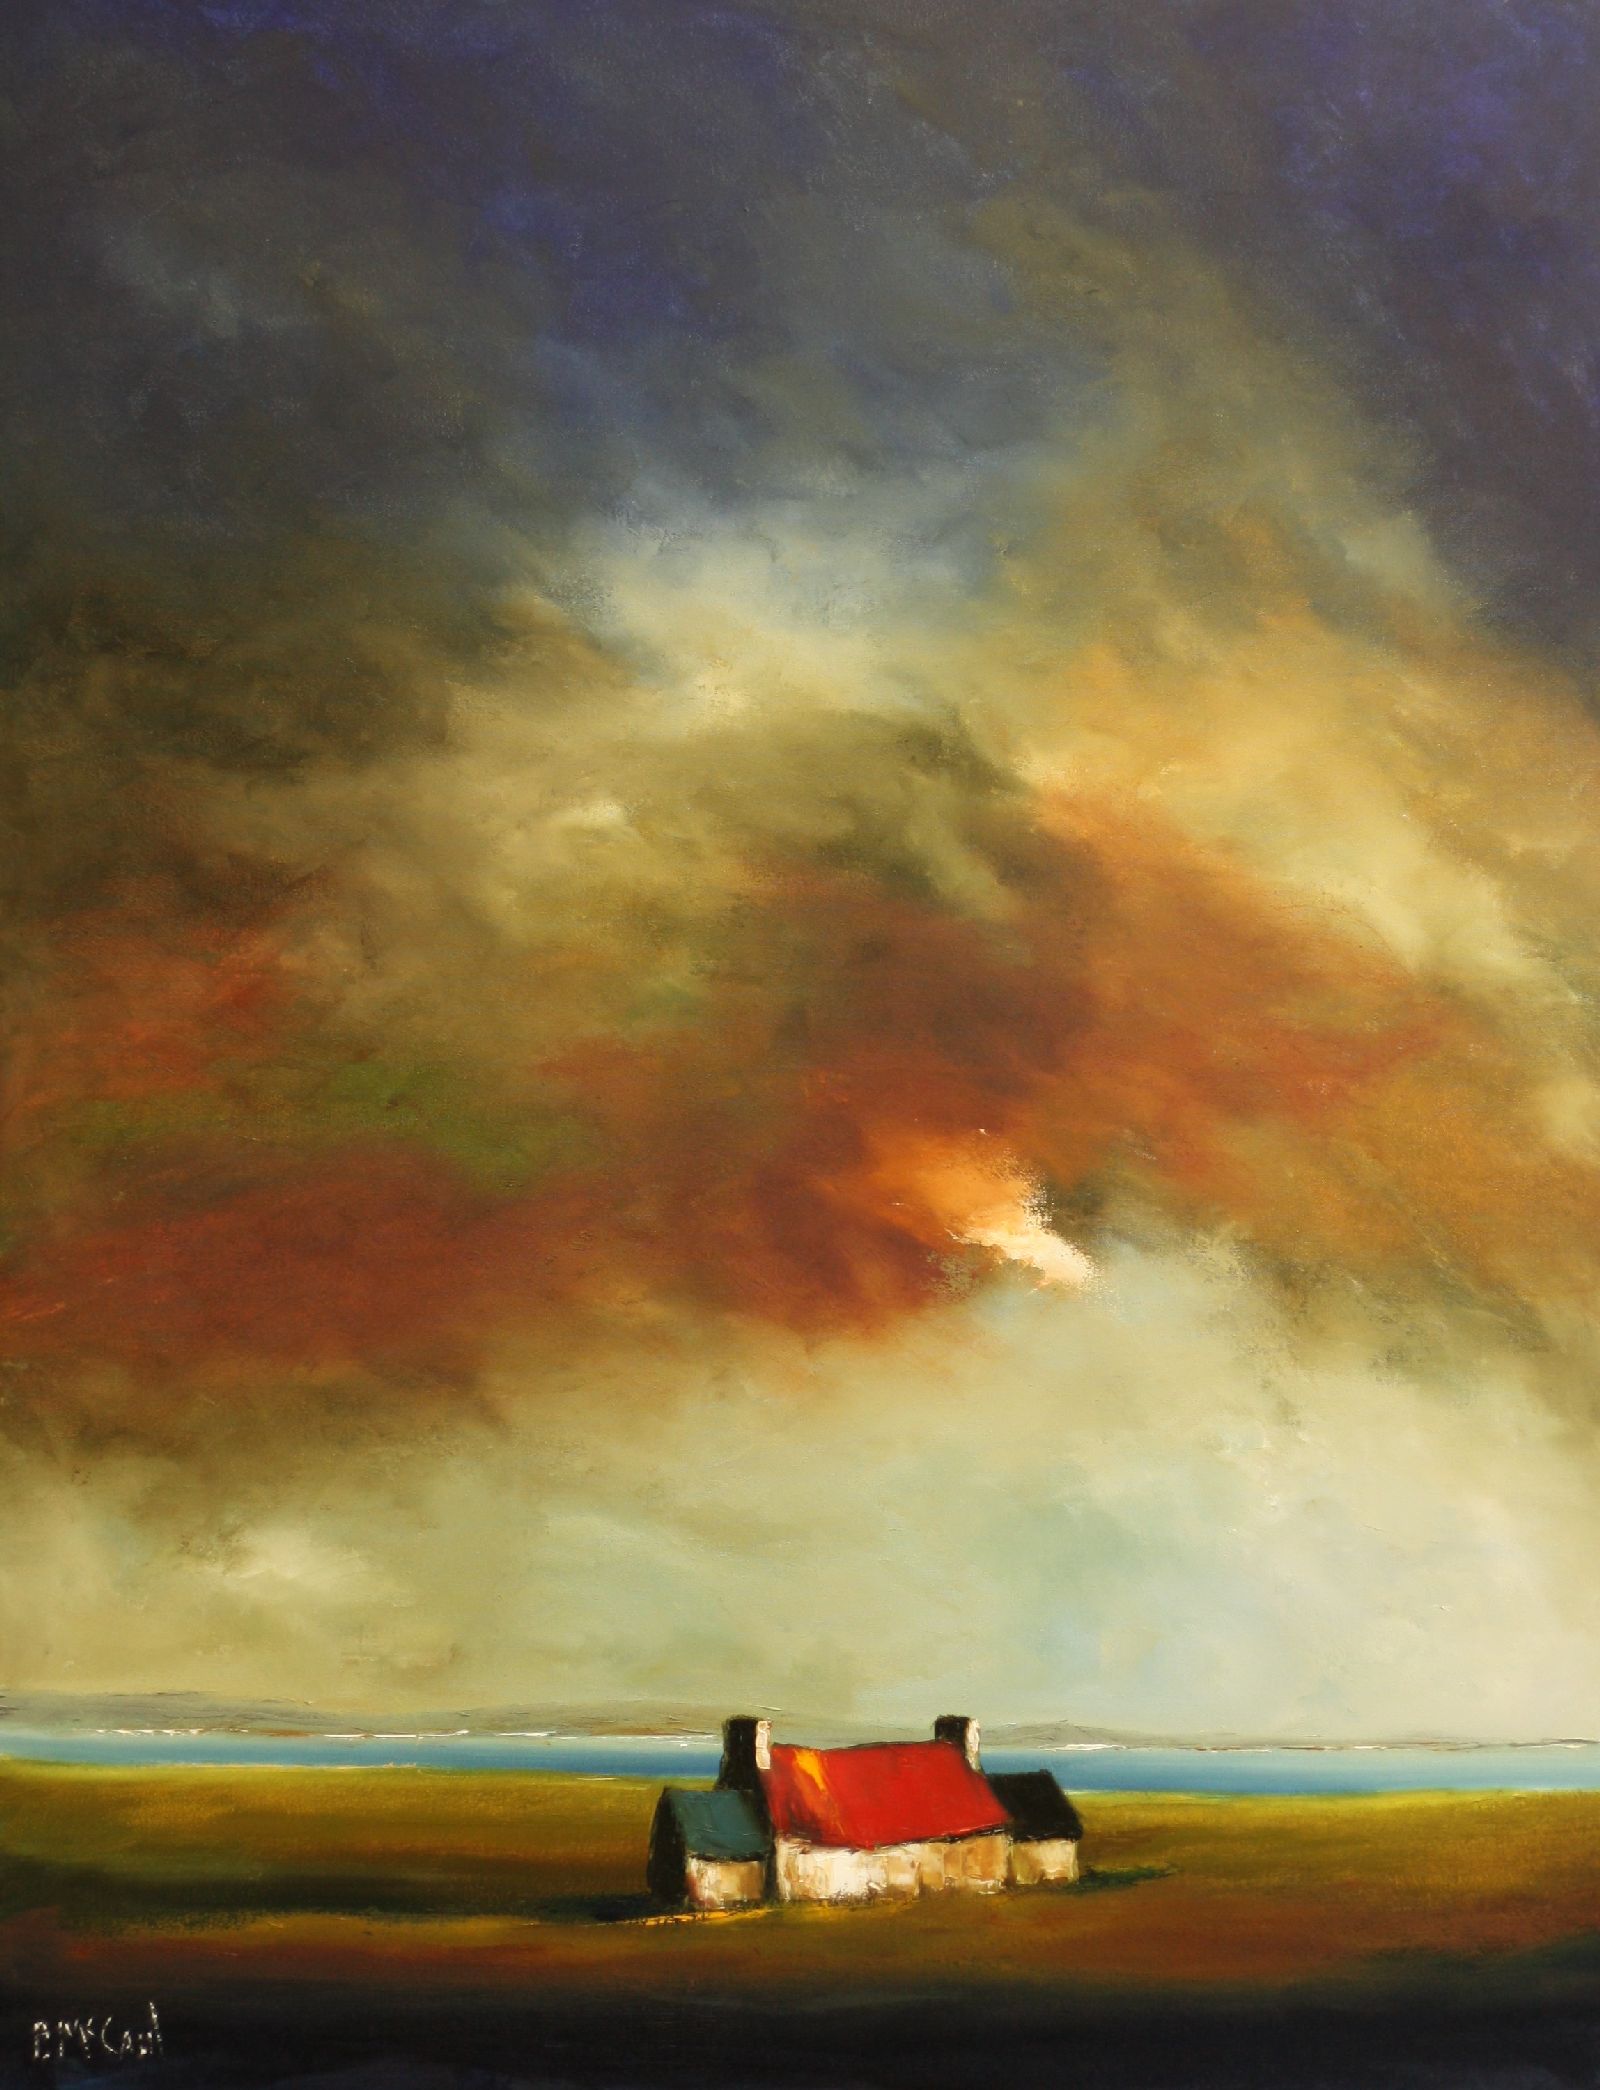 Under a Banshee Sky by Padraig McCaul